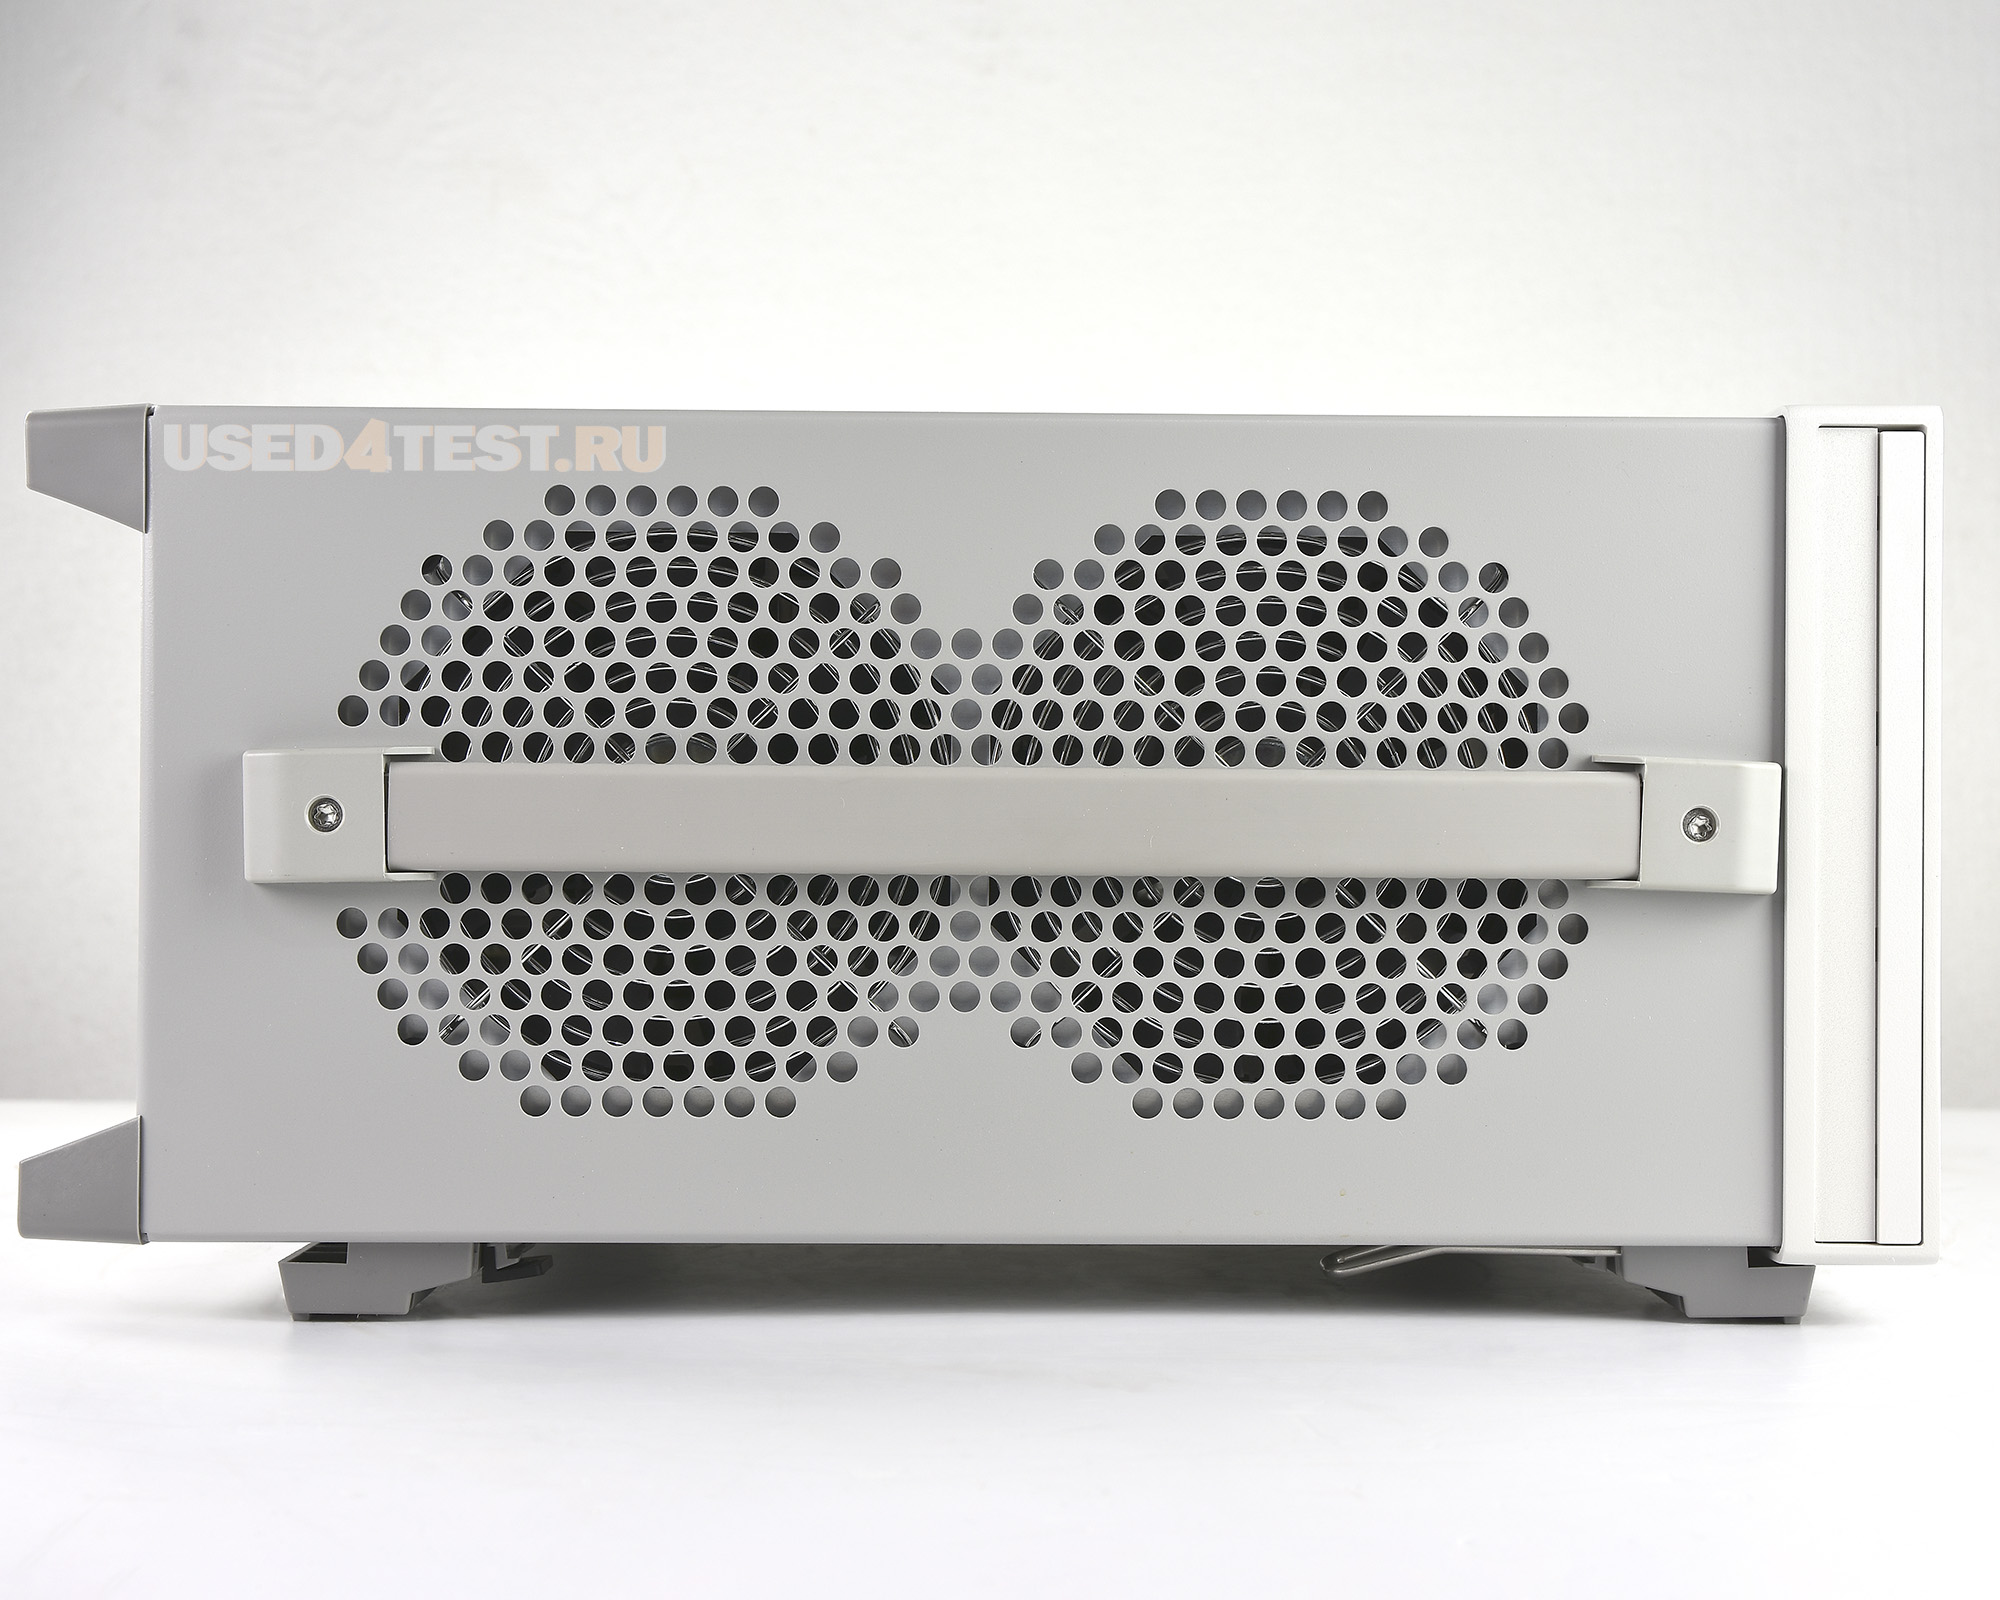 Анализатор сигналов Keysight N9000A
с диапазоном от 9 кГц до 13,6 ГГц

 В комплекте с опциями: 


	513 — Frequency range 13,6 GHz
	EP4 — Enhanced Phase Noise performance, CXA
P13 — Preamplifier 13,6 GHz
N9060B-2FP — Spectrum Analyzer Measurement Application
